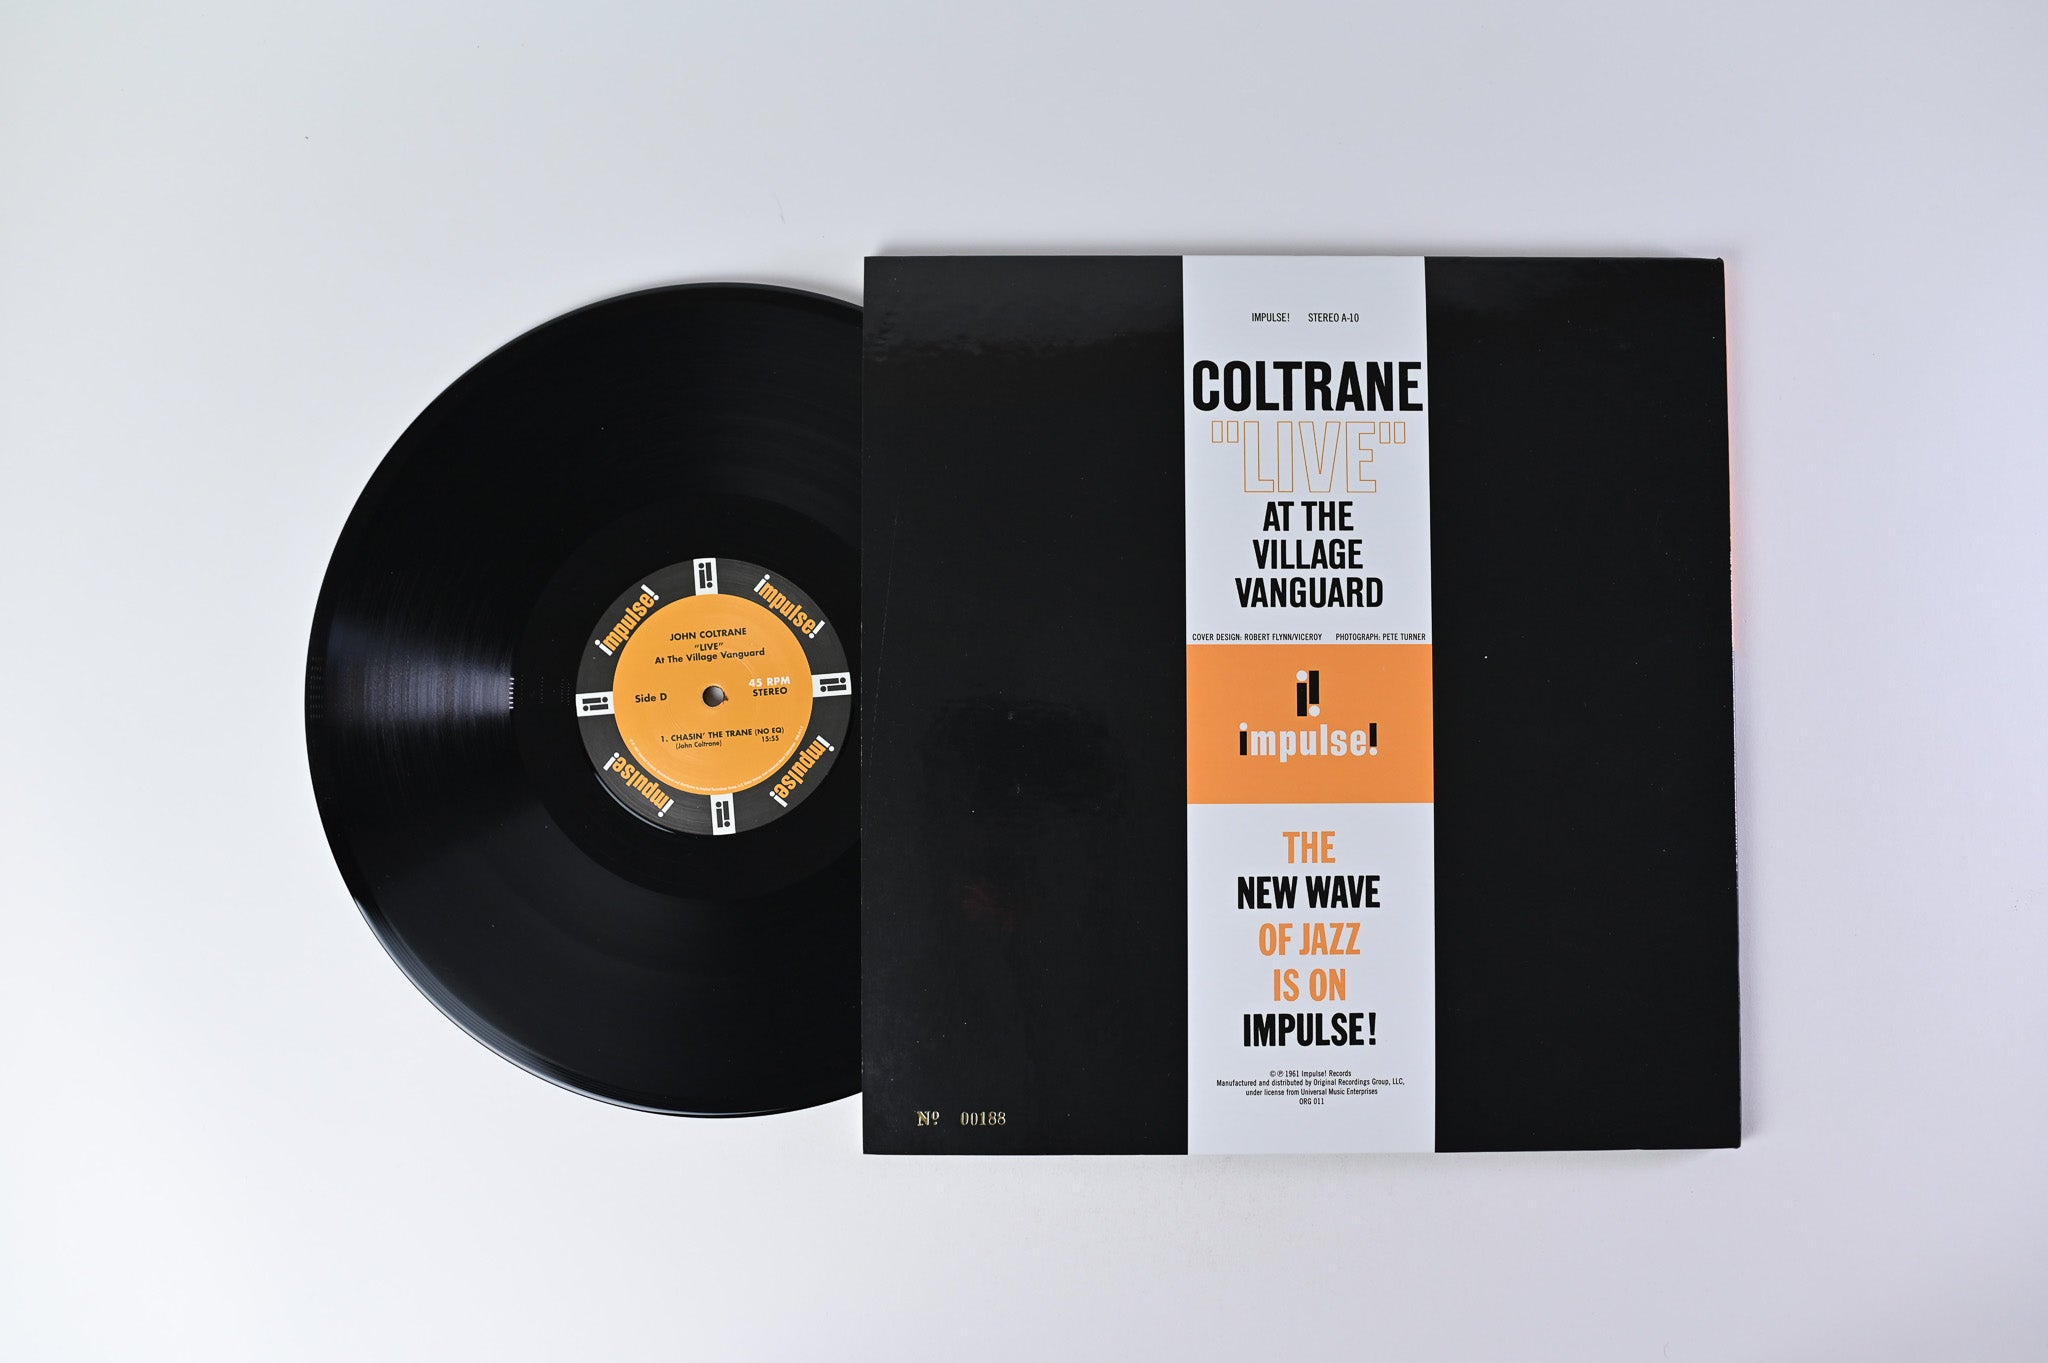 John Coltrane - "Live" At The Village Vanguard on Original Recordings Group